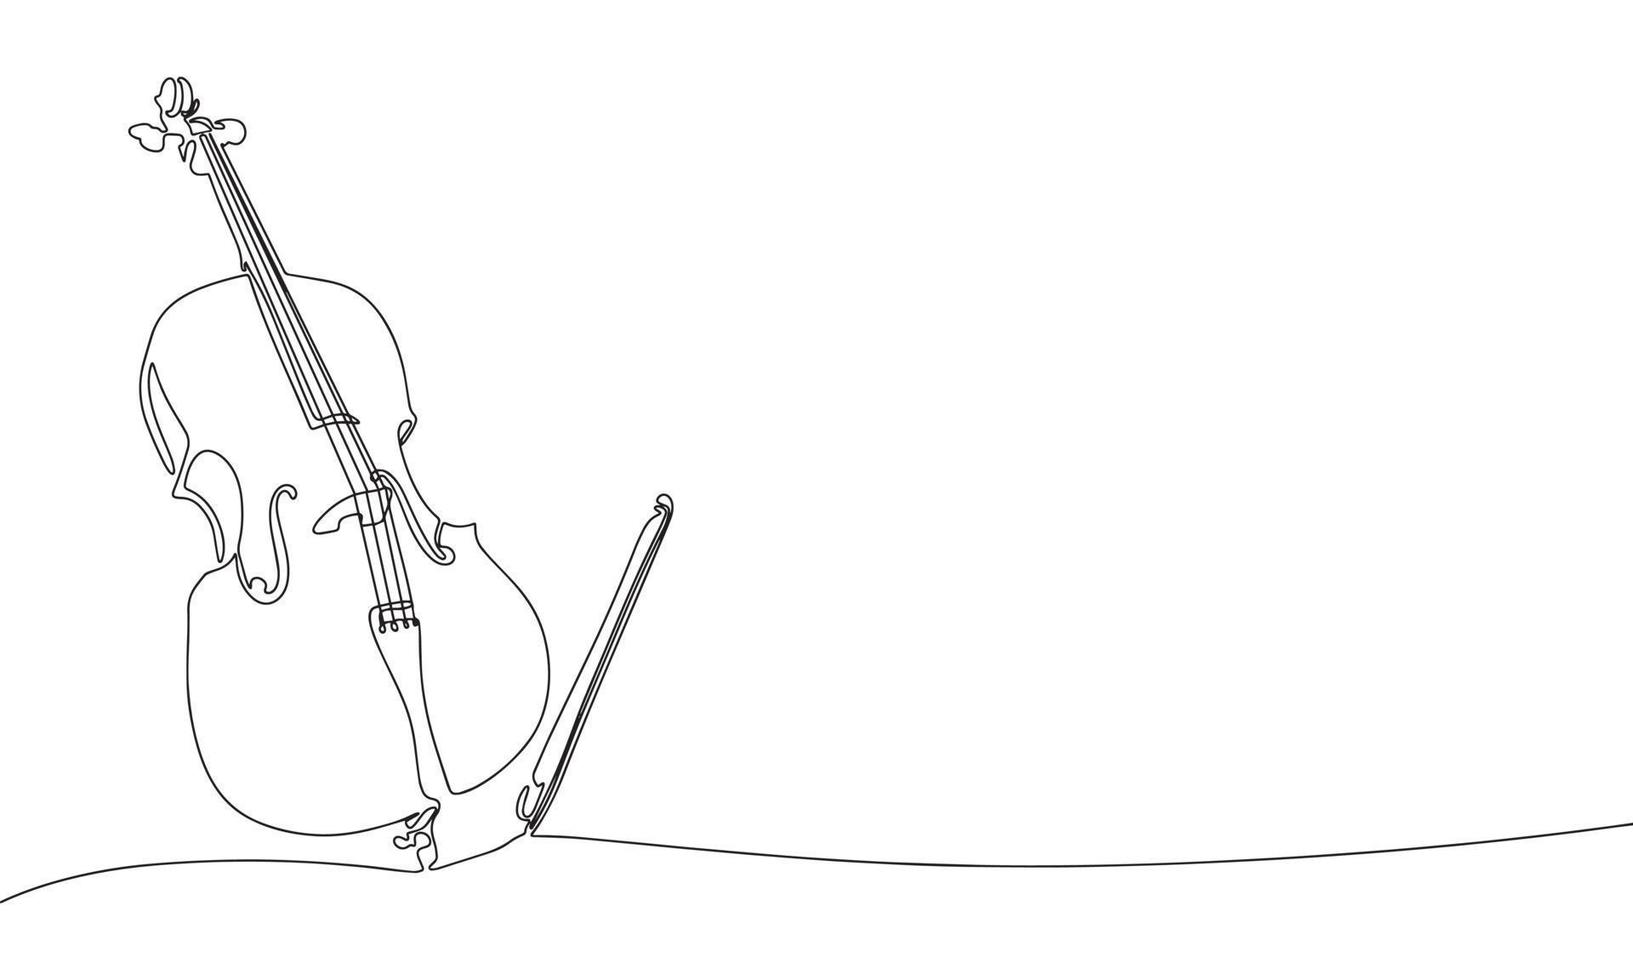 One line continuous cello illustration. Line art classic musical instrument. Violoncello vector